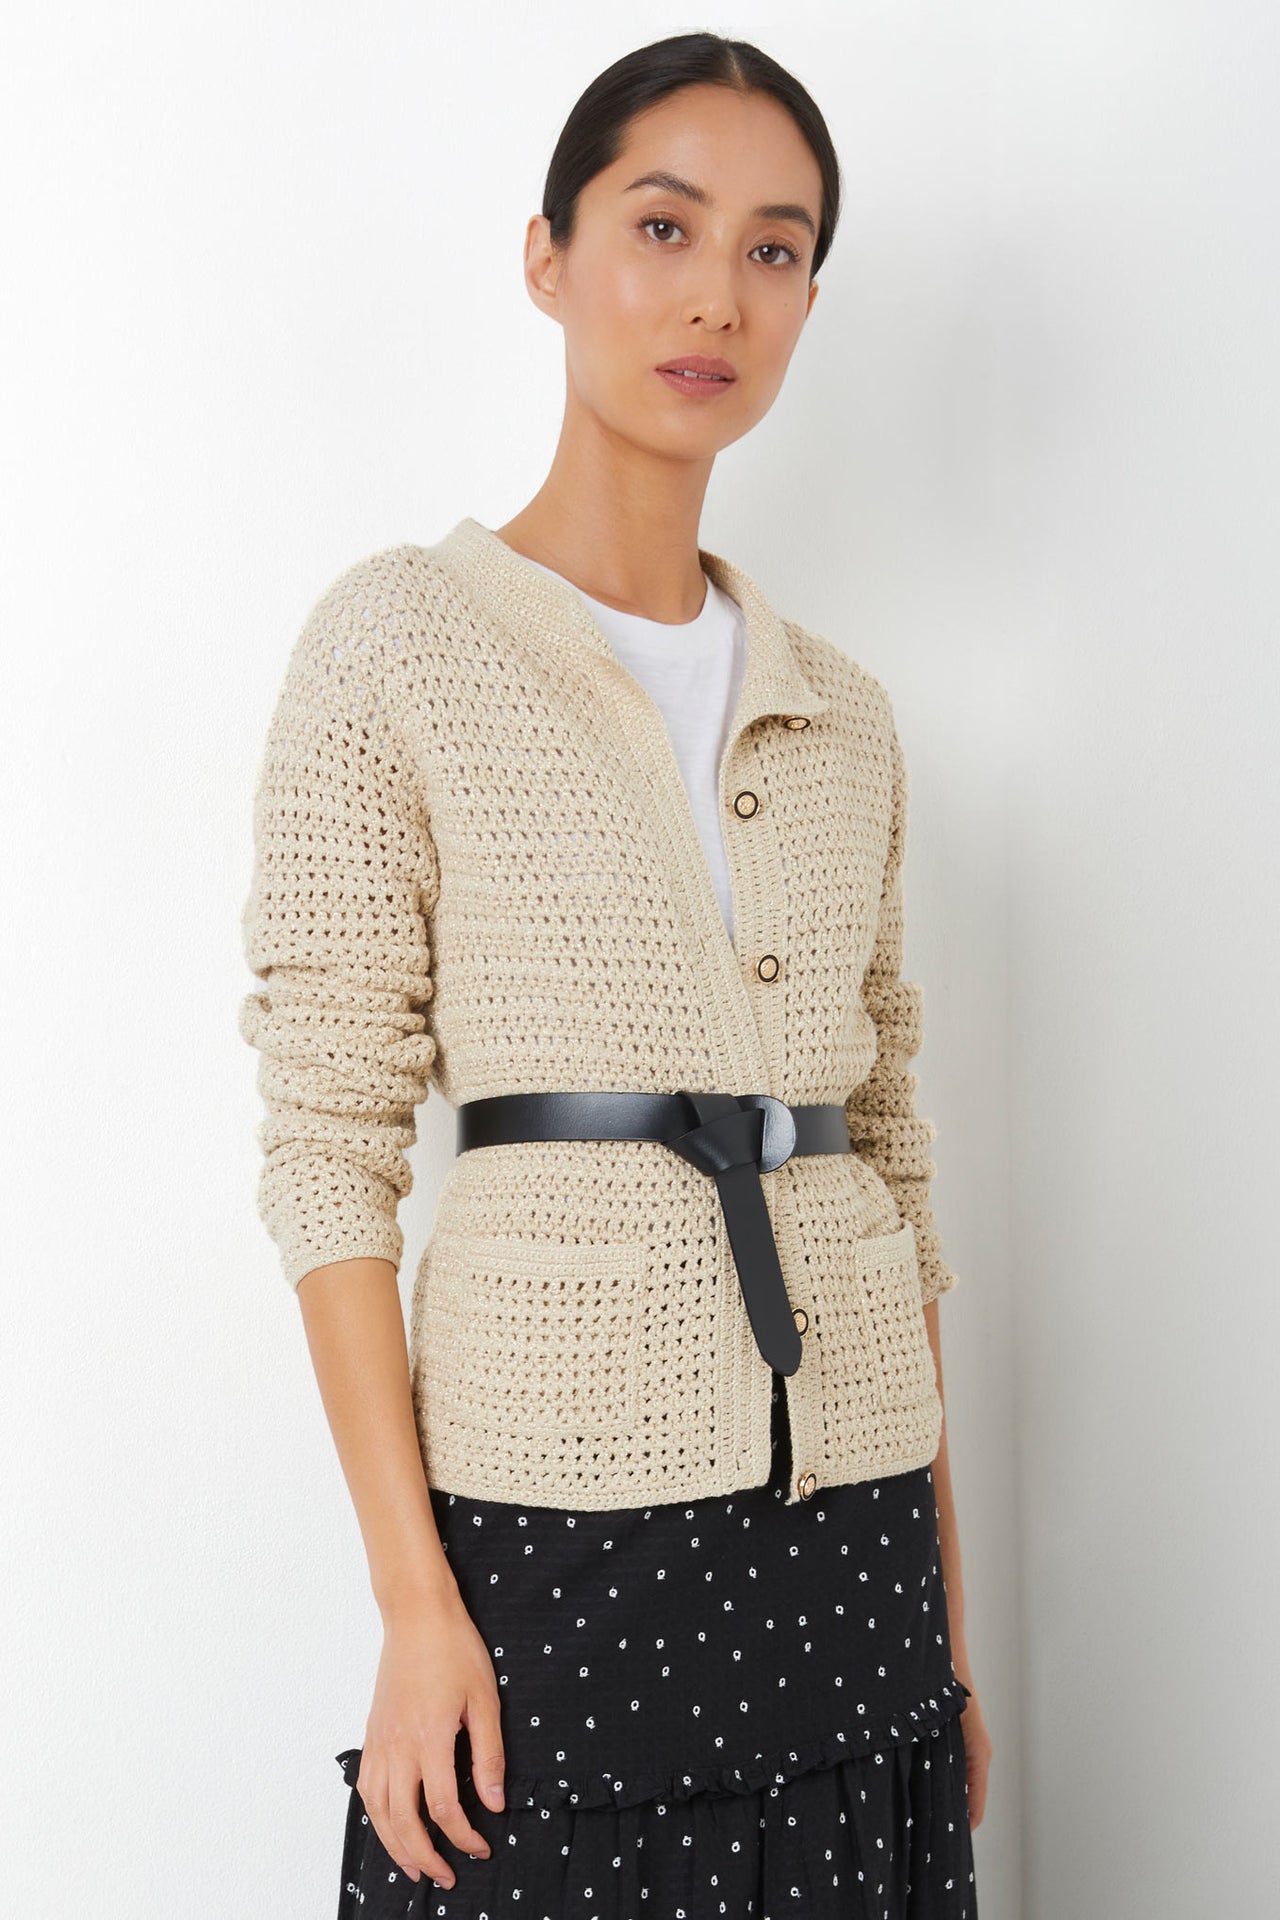 Lucie Shimmer Crochet Jacket - Gold Shimmer – WYSE London